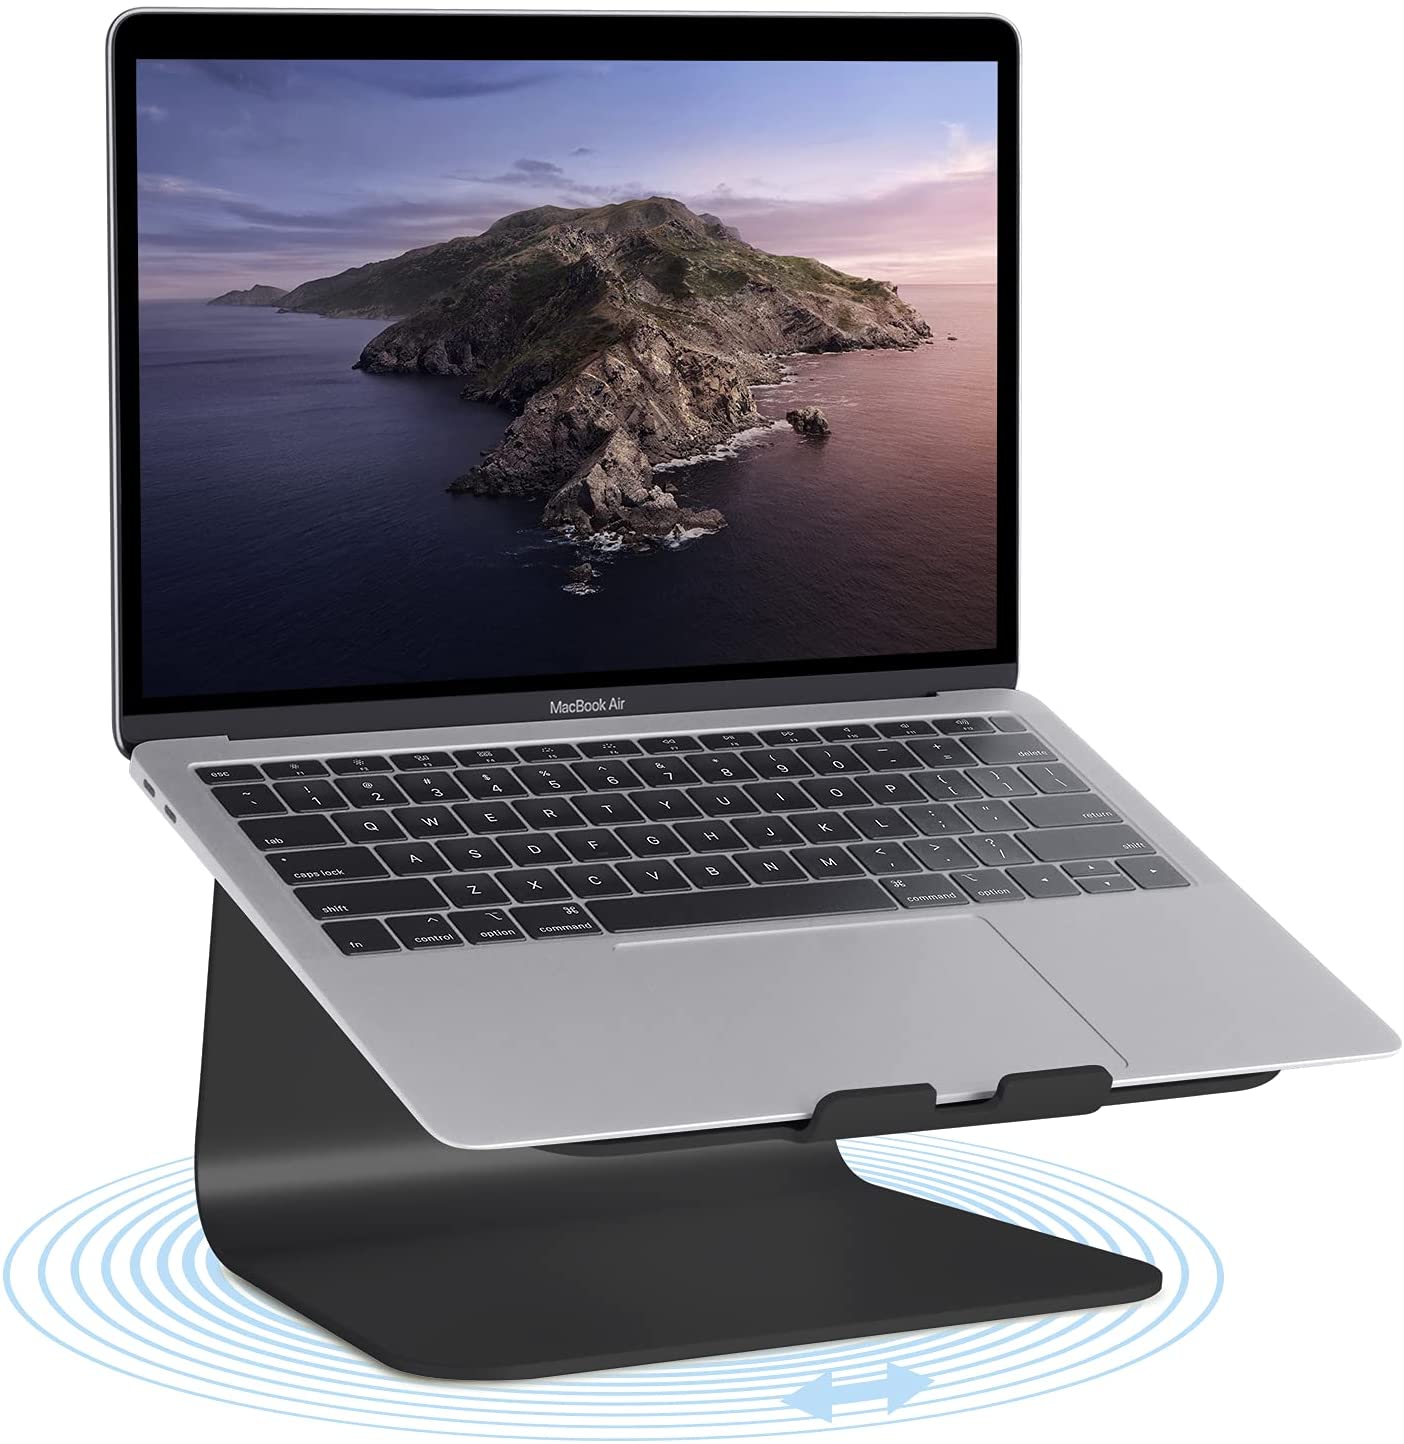 Rain Design mStand360 Laptop Stand w/ Swivel Base - Black